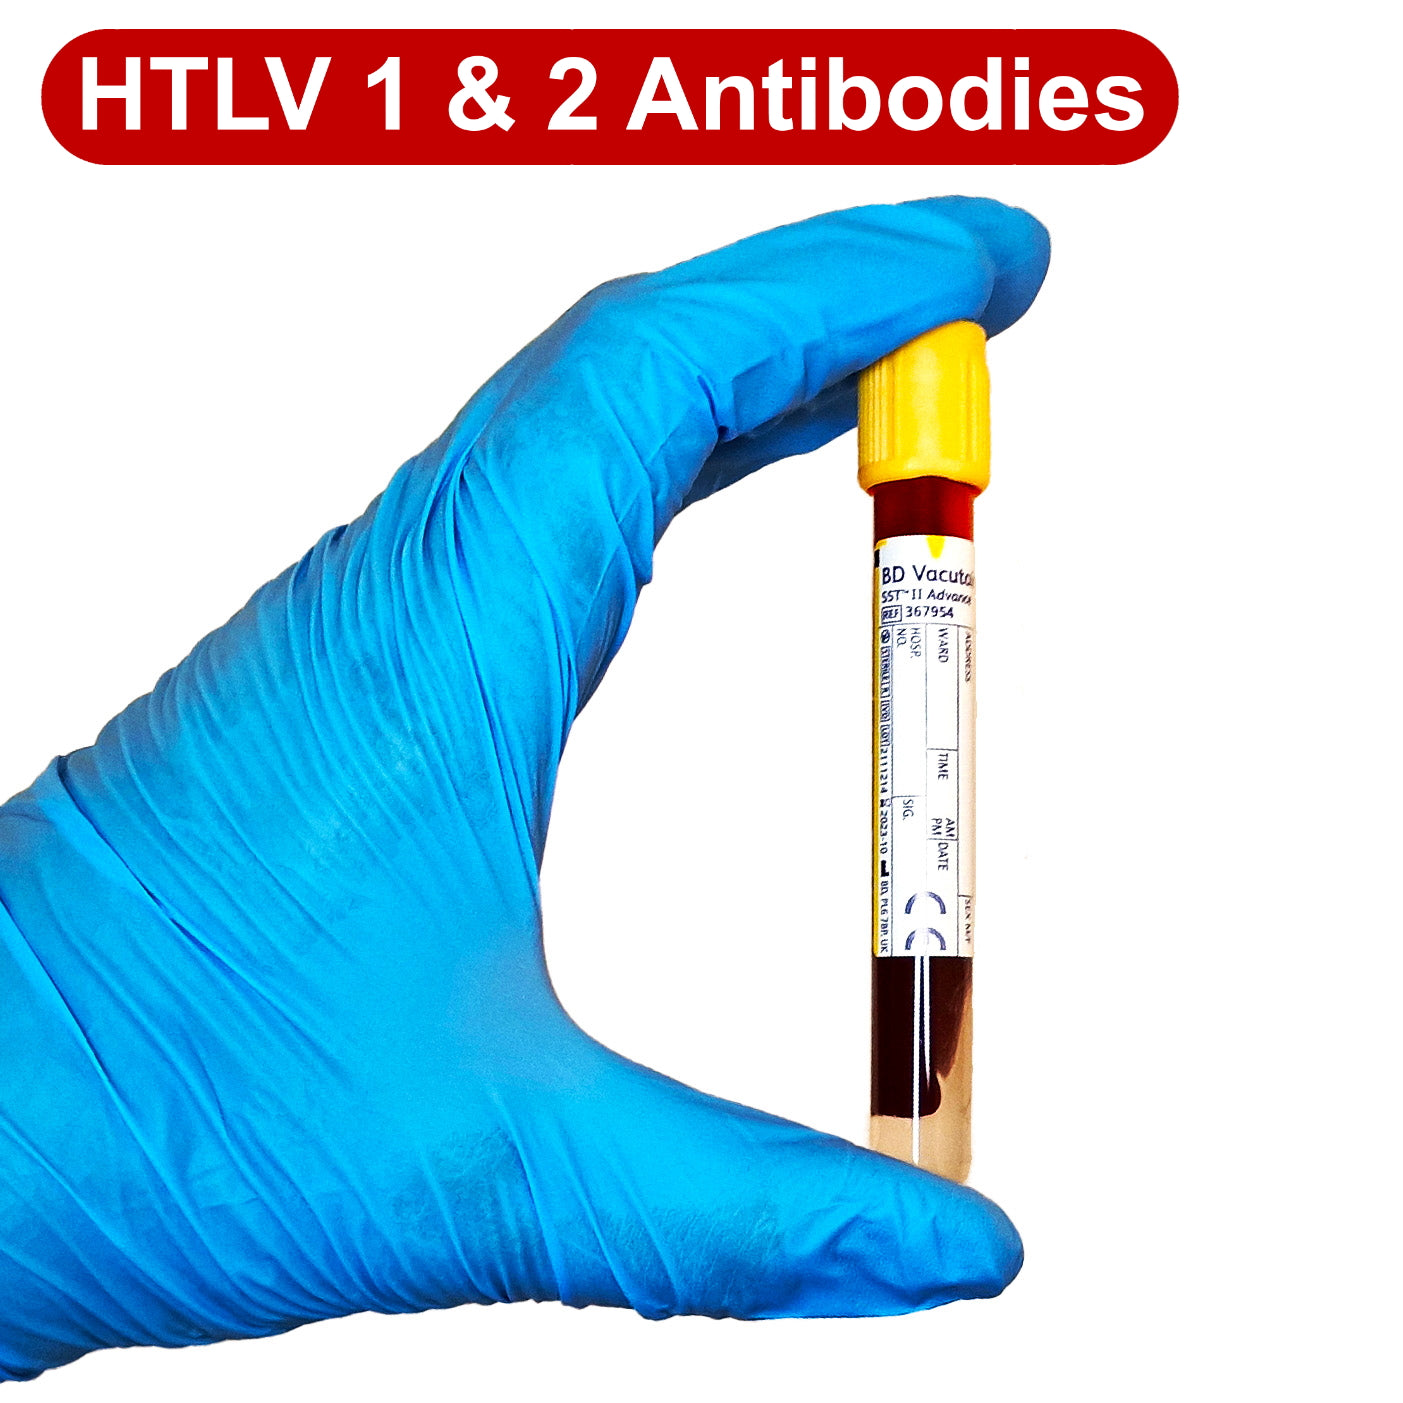 HTLV 1 & 2 Antibody Blood Test